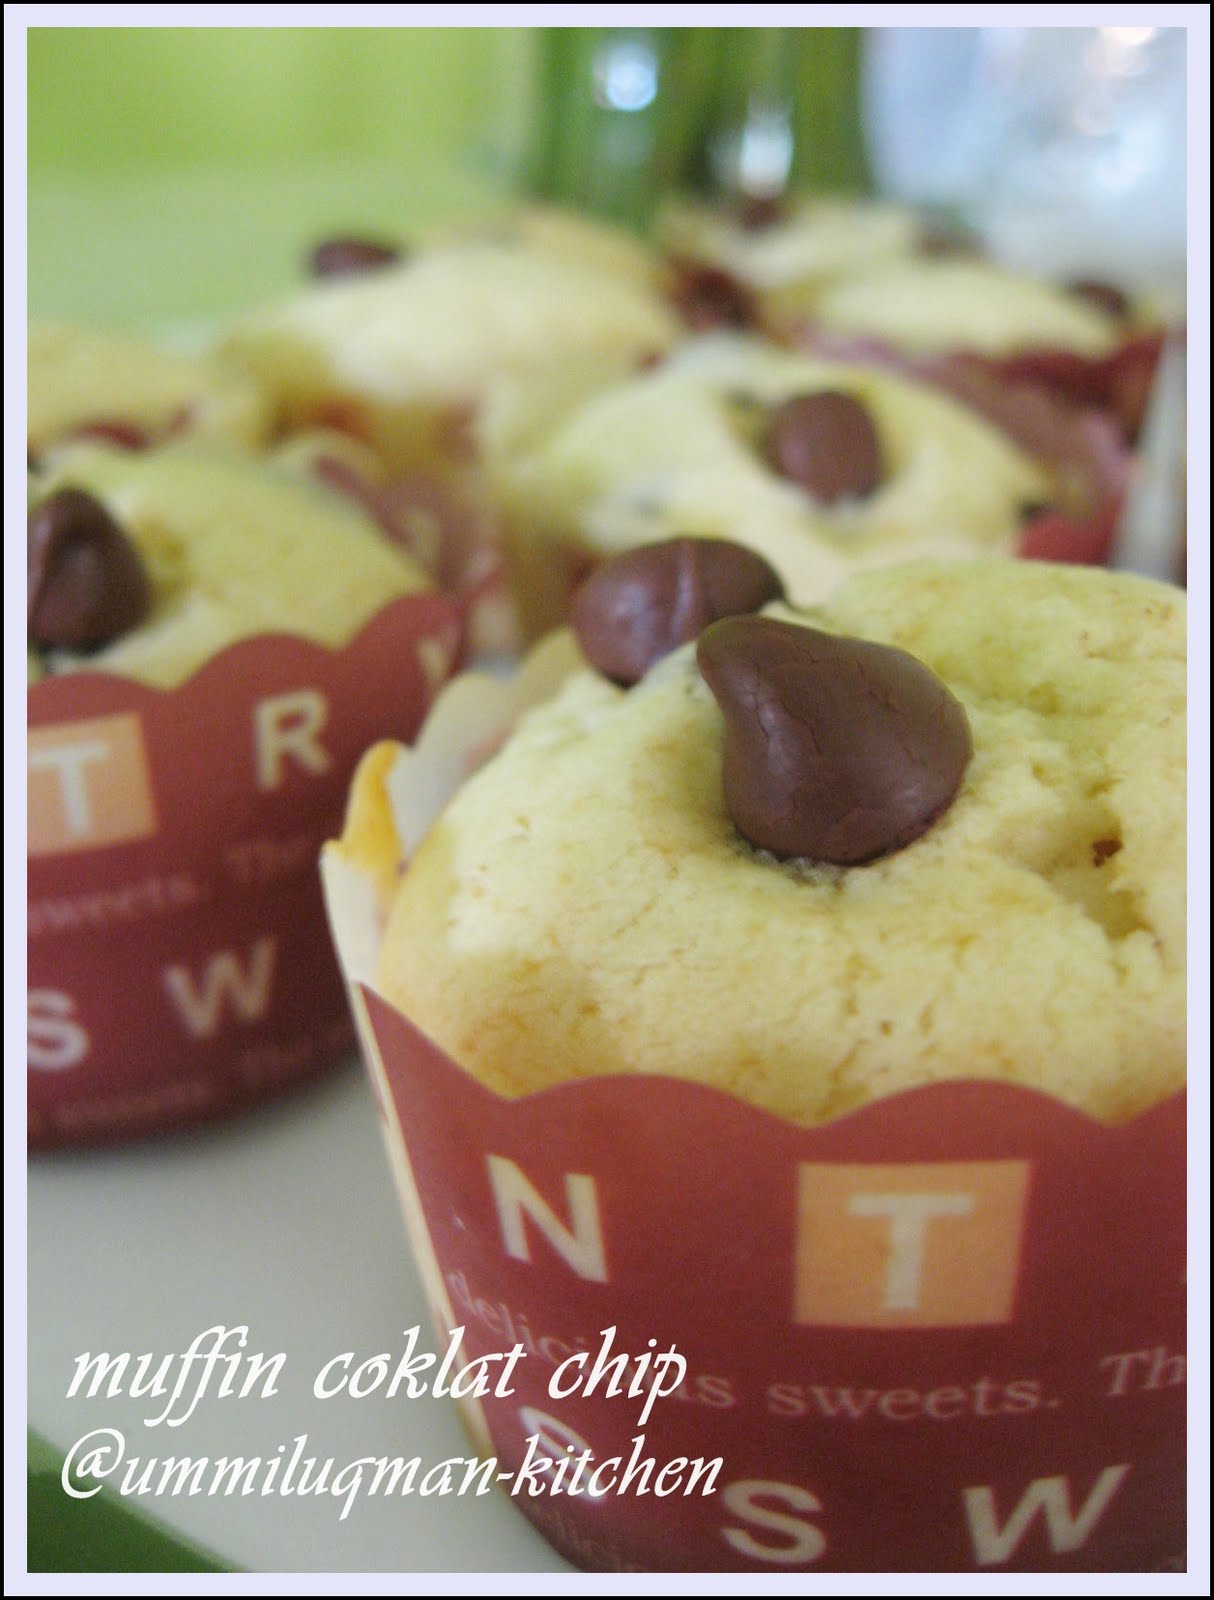 Jom makan: muffin coklat chip